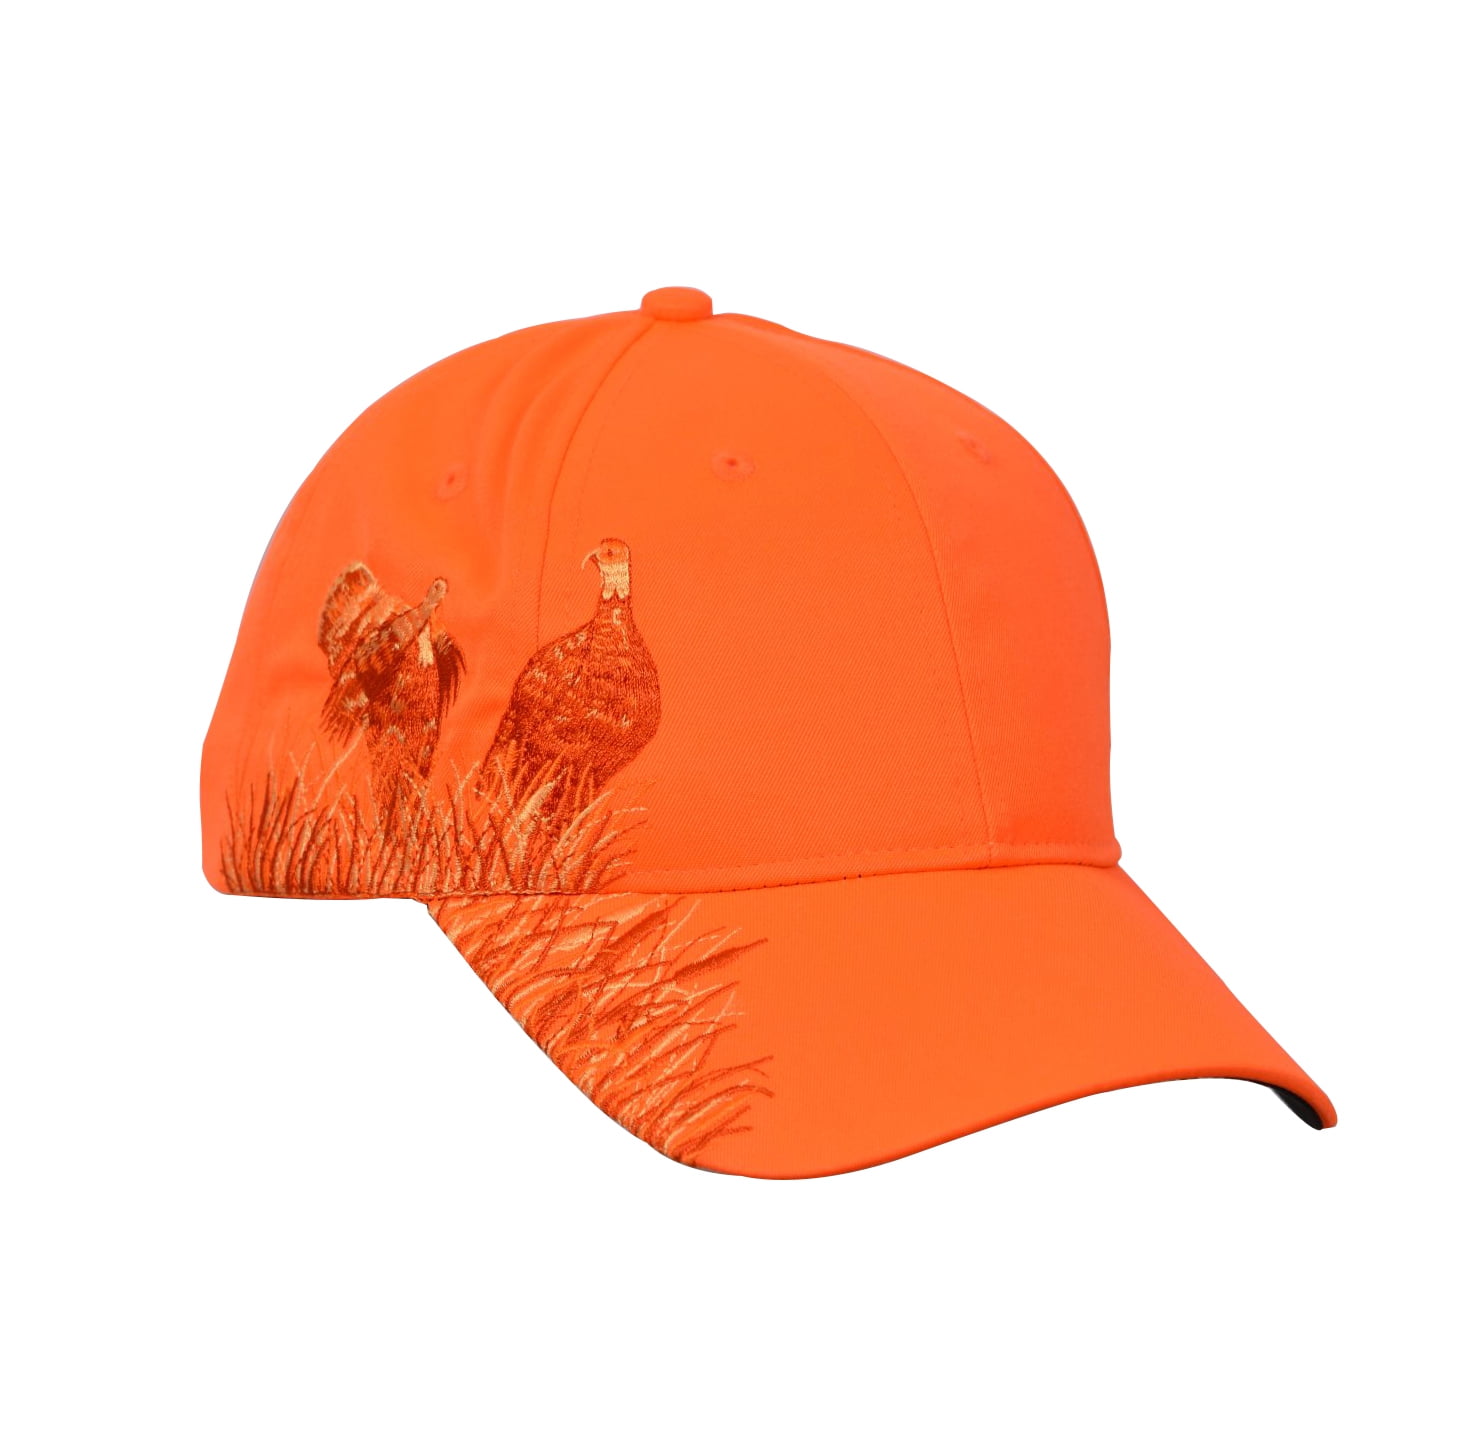 Mallard Embroidered SOFT Unstructured Adjustable Hat Cap 